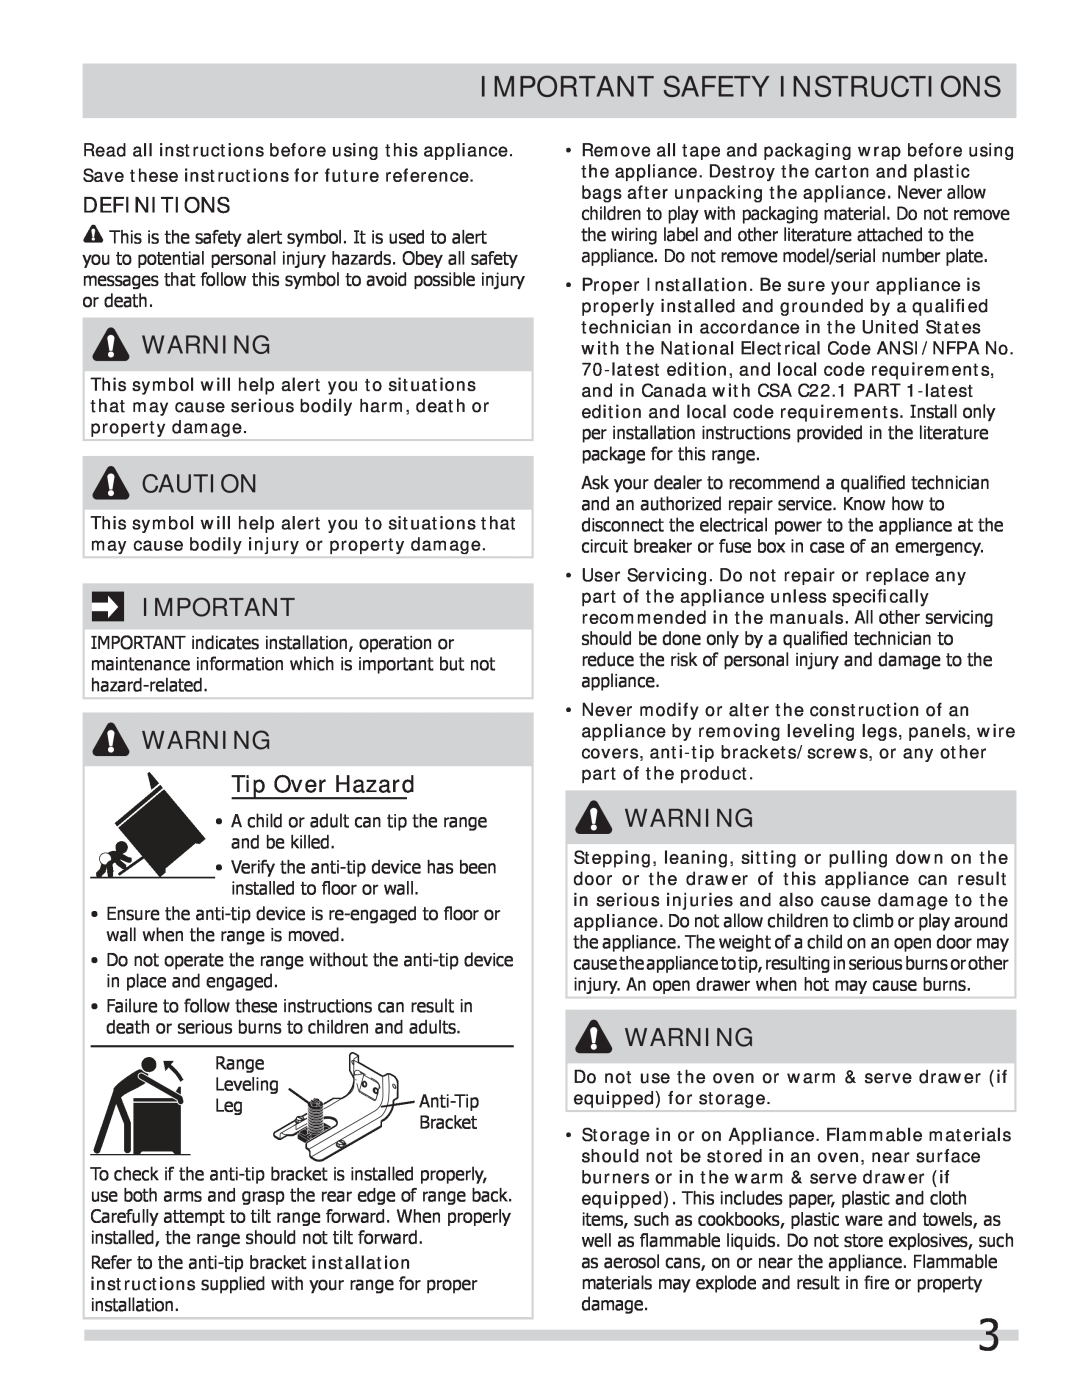 Frigidaire FGEF306TMF, FGEF306TMB, FGEF306TMW Important Safety Instructions, Definitions, Tip Over Hazard 